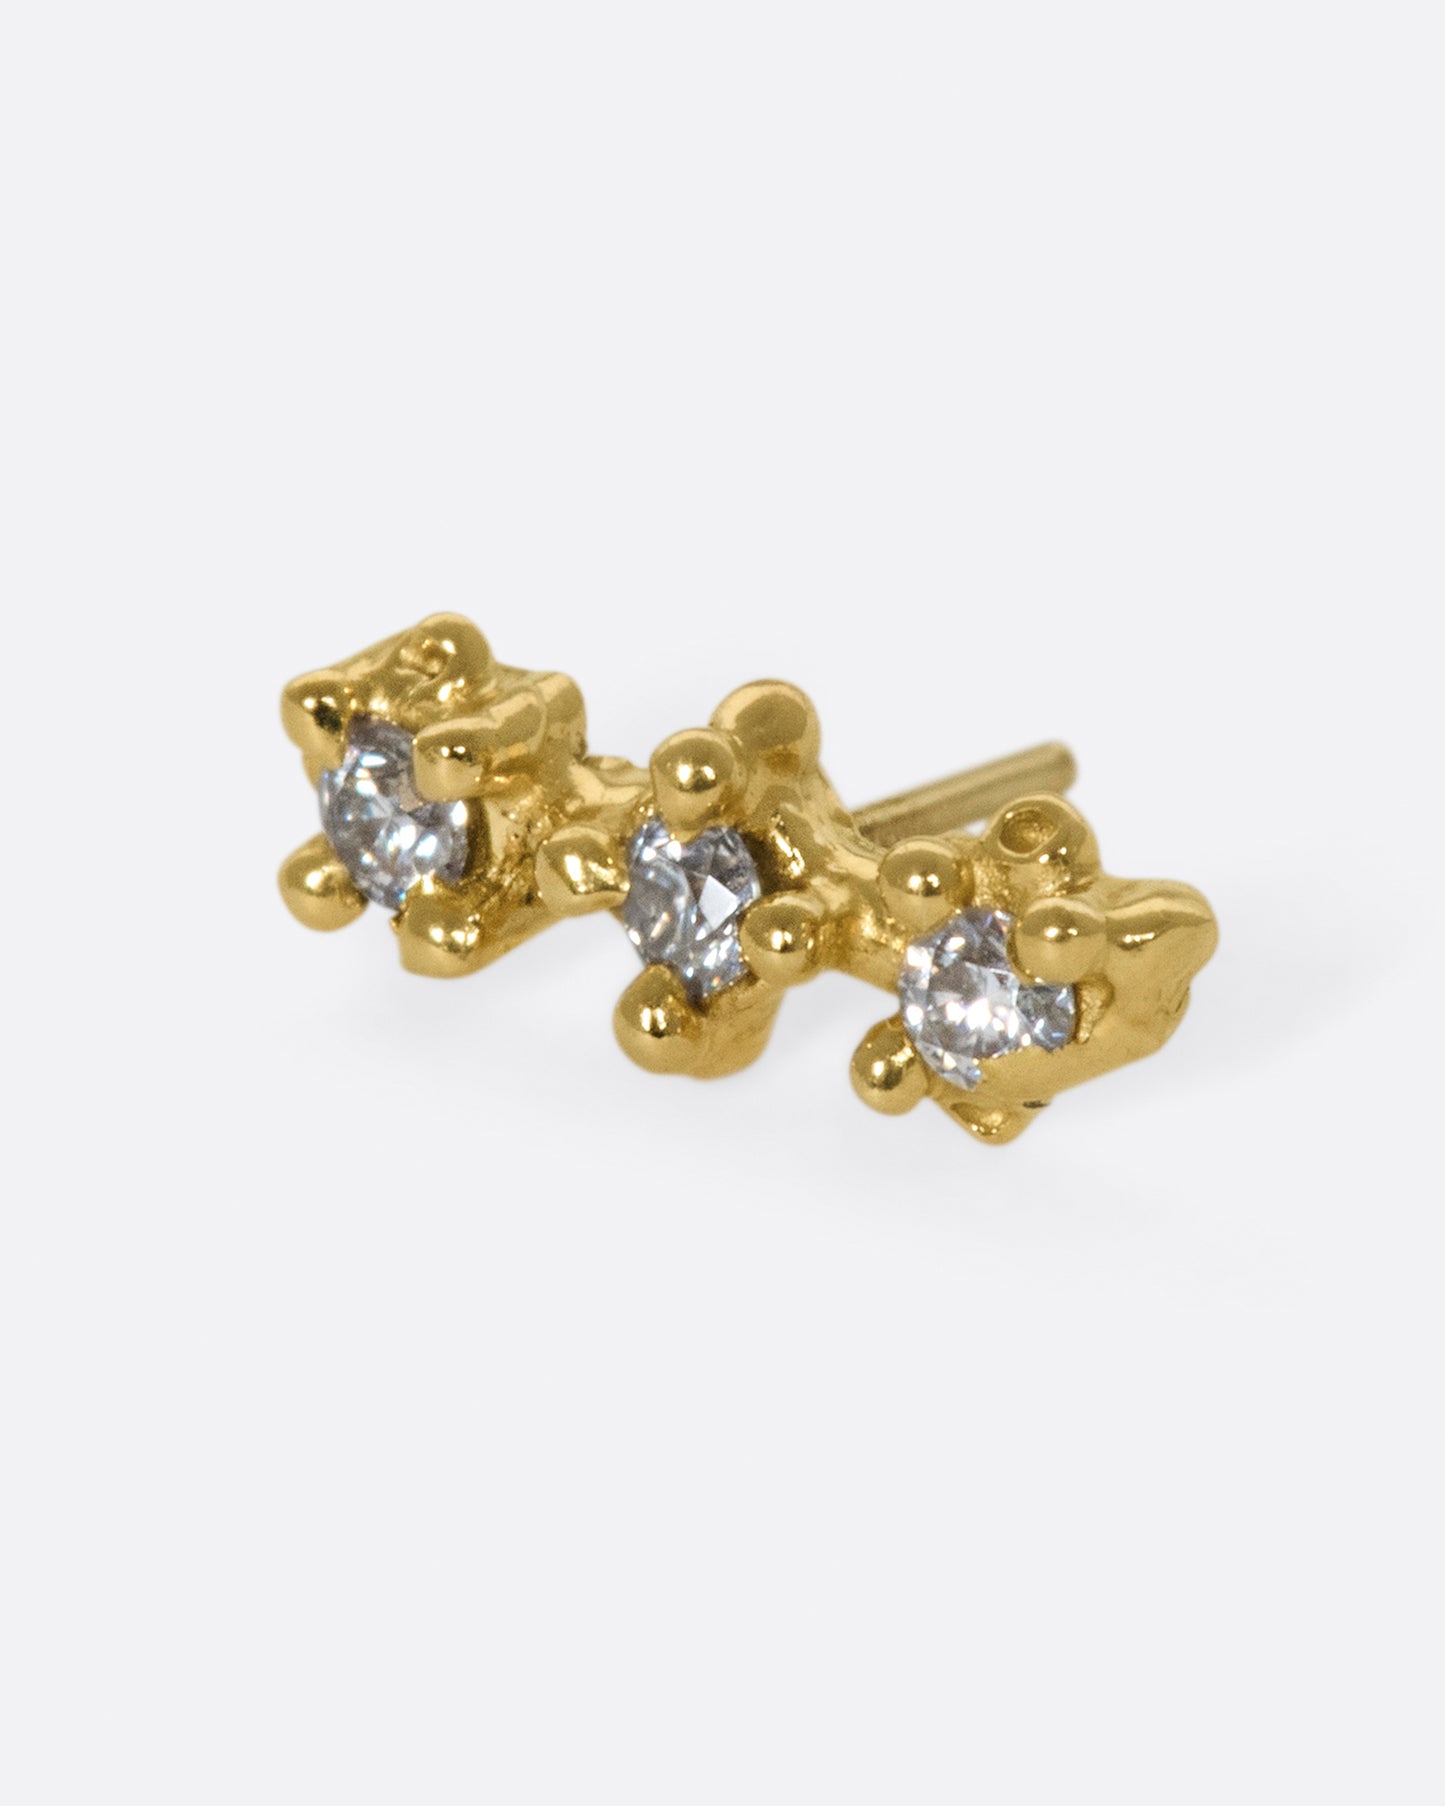 An organically shaped and textured diamond bar earring.